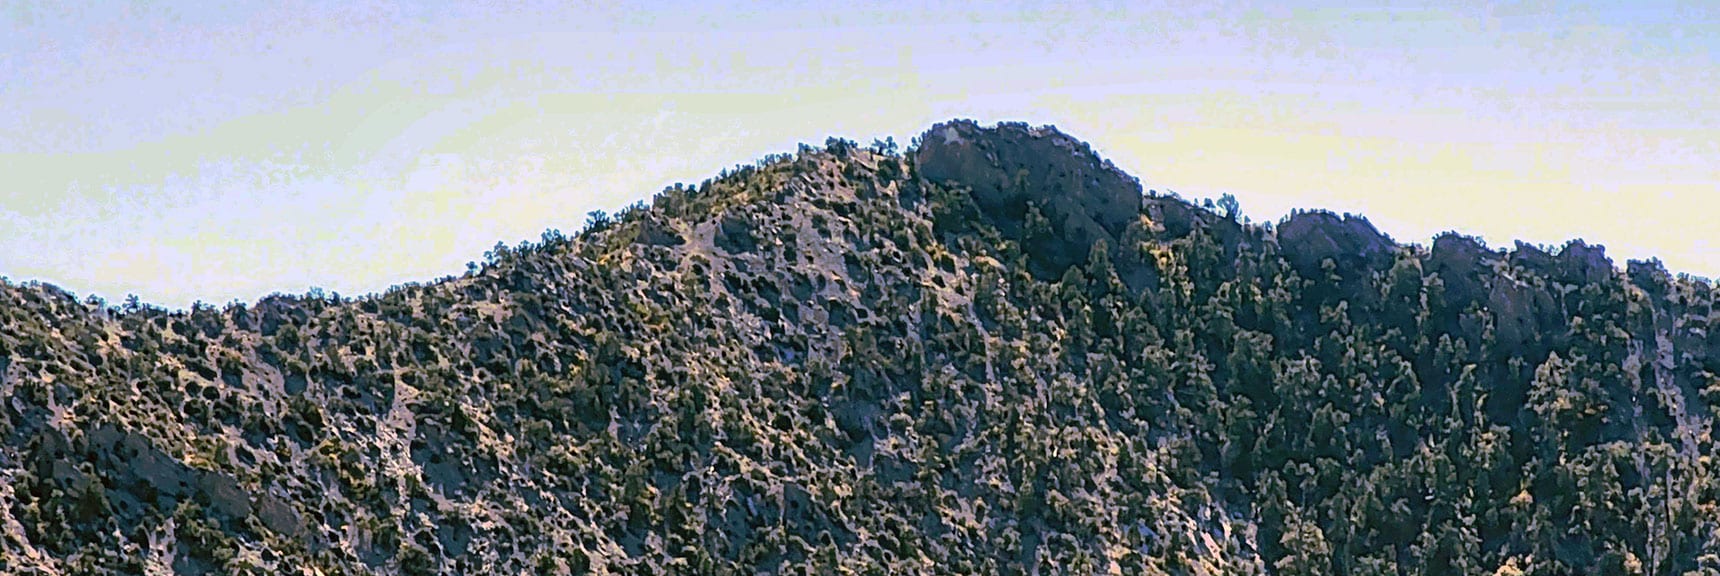 North Peak on Rainbow Mts. Upper Crest Ridgeline | Switchback Spring Ridge | Red Rock Canyon, Nevada